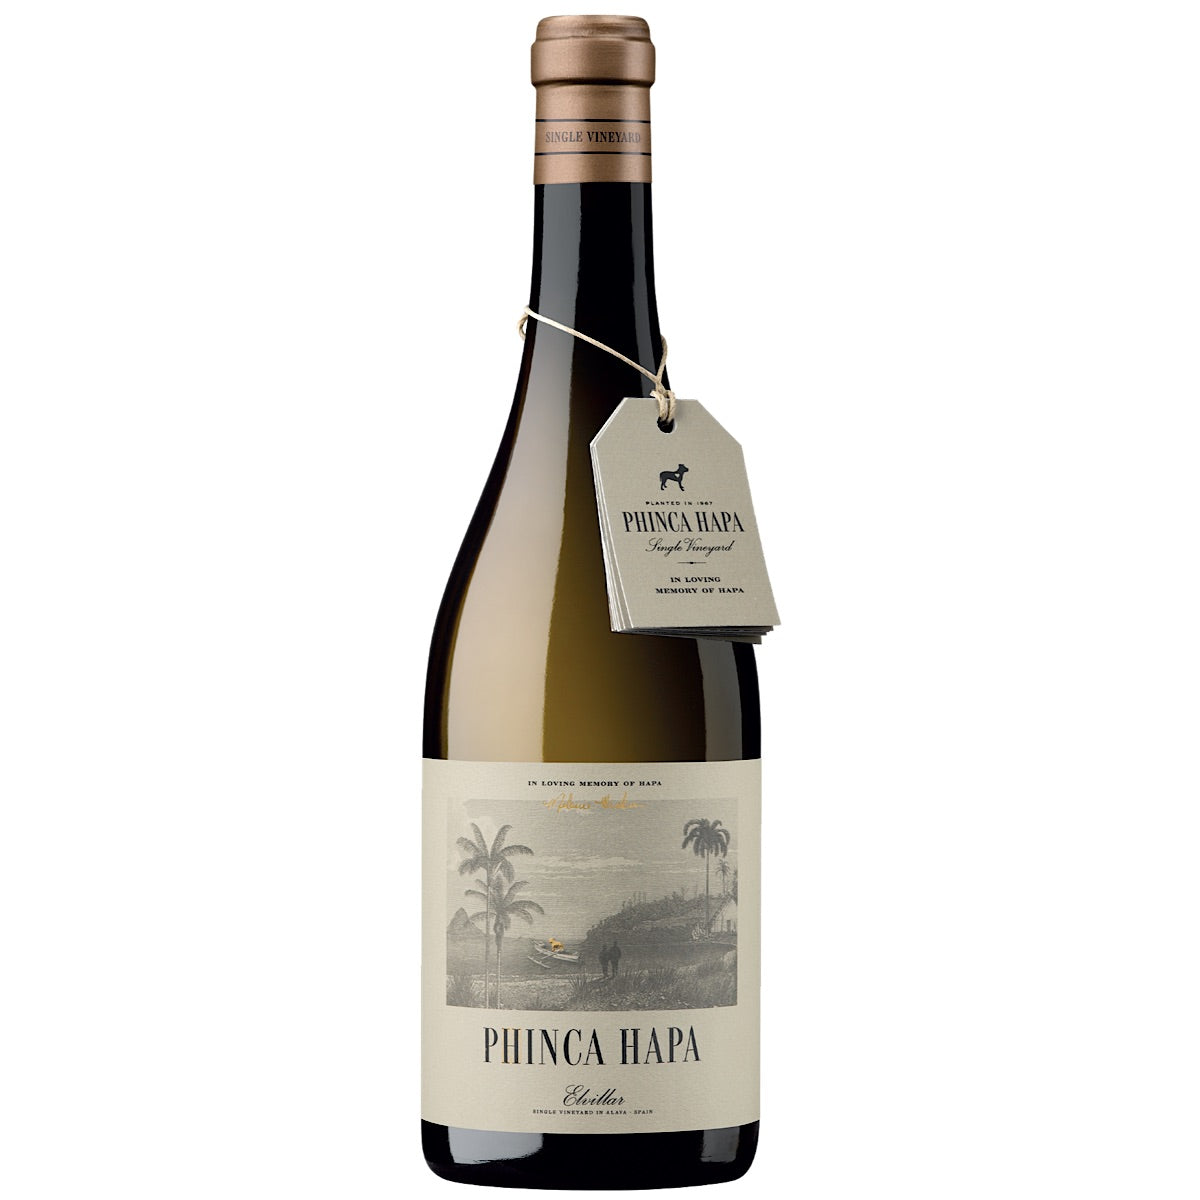 Struggling Vines, Phinca Hapa Blanco, Rioja 6 Bottle Case 75cl